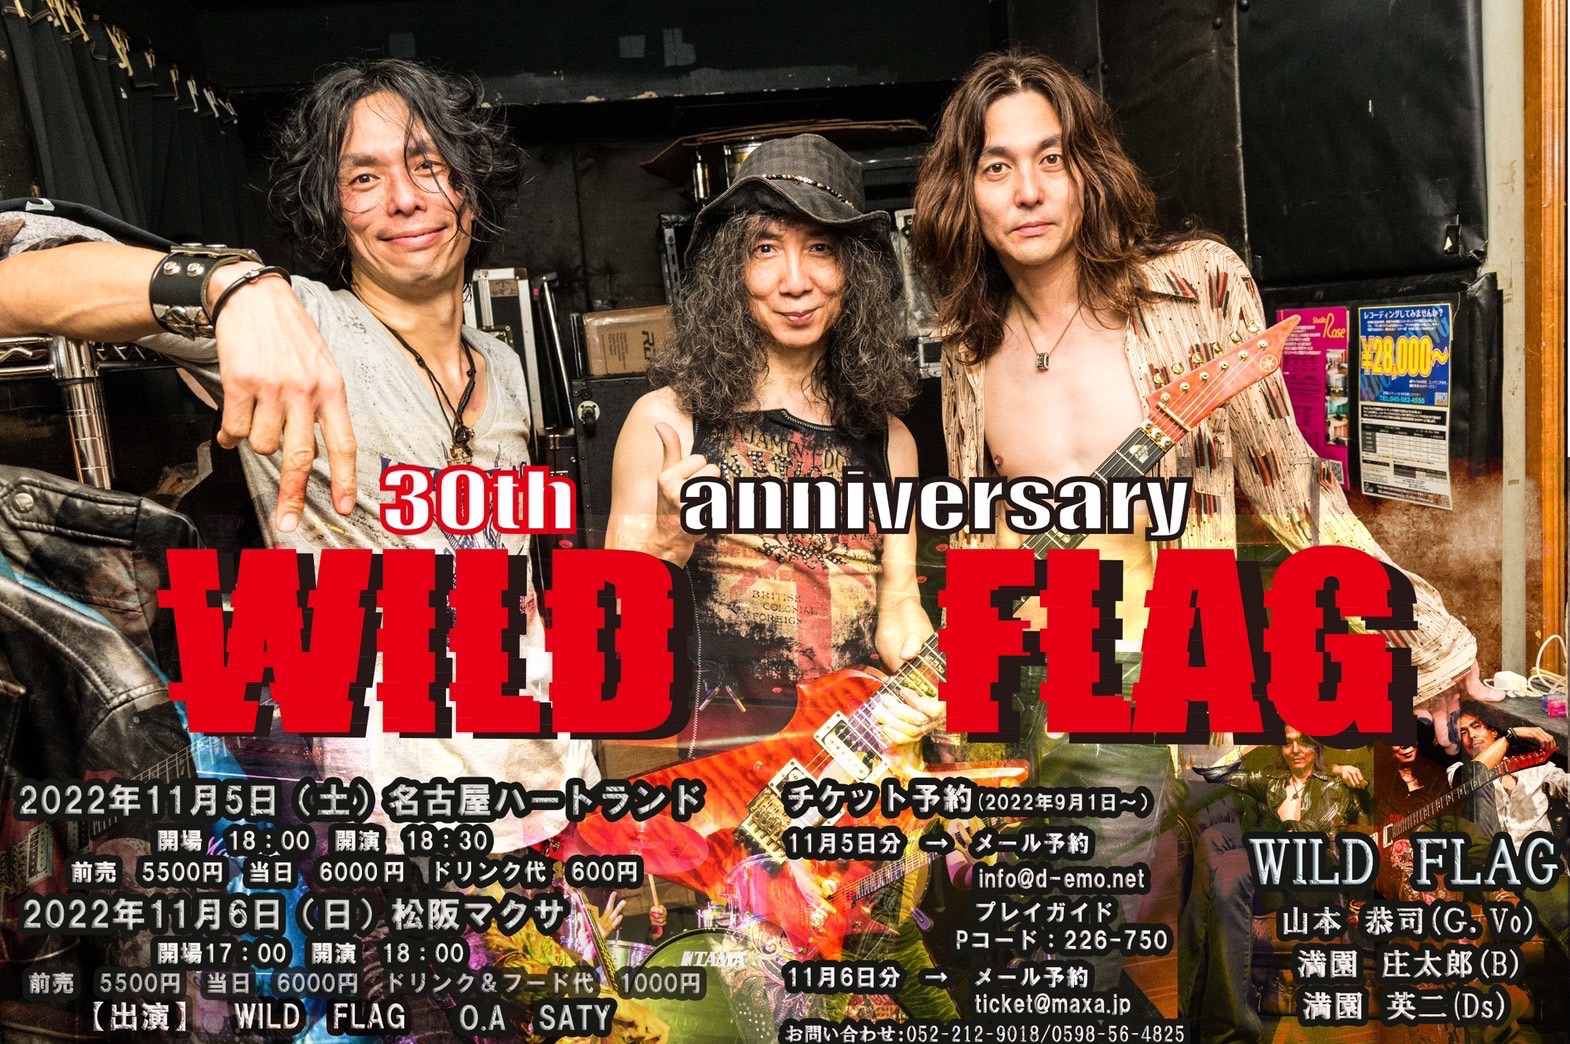 2022/11/5,6 WILDFLAG30周年記念ライブ名古屋、松坂公演のお知らせです 